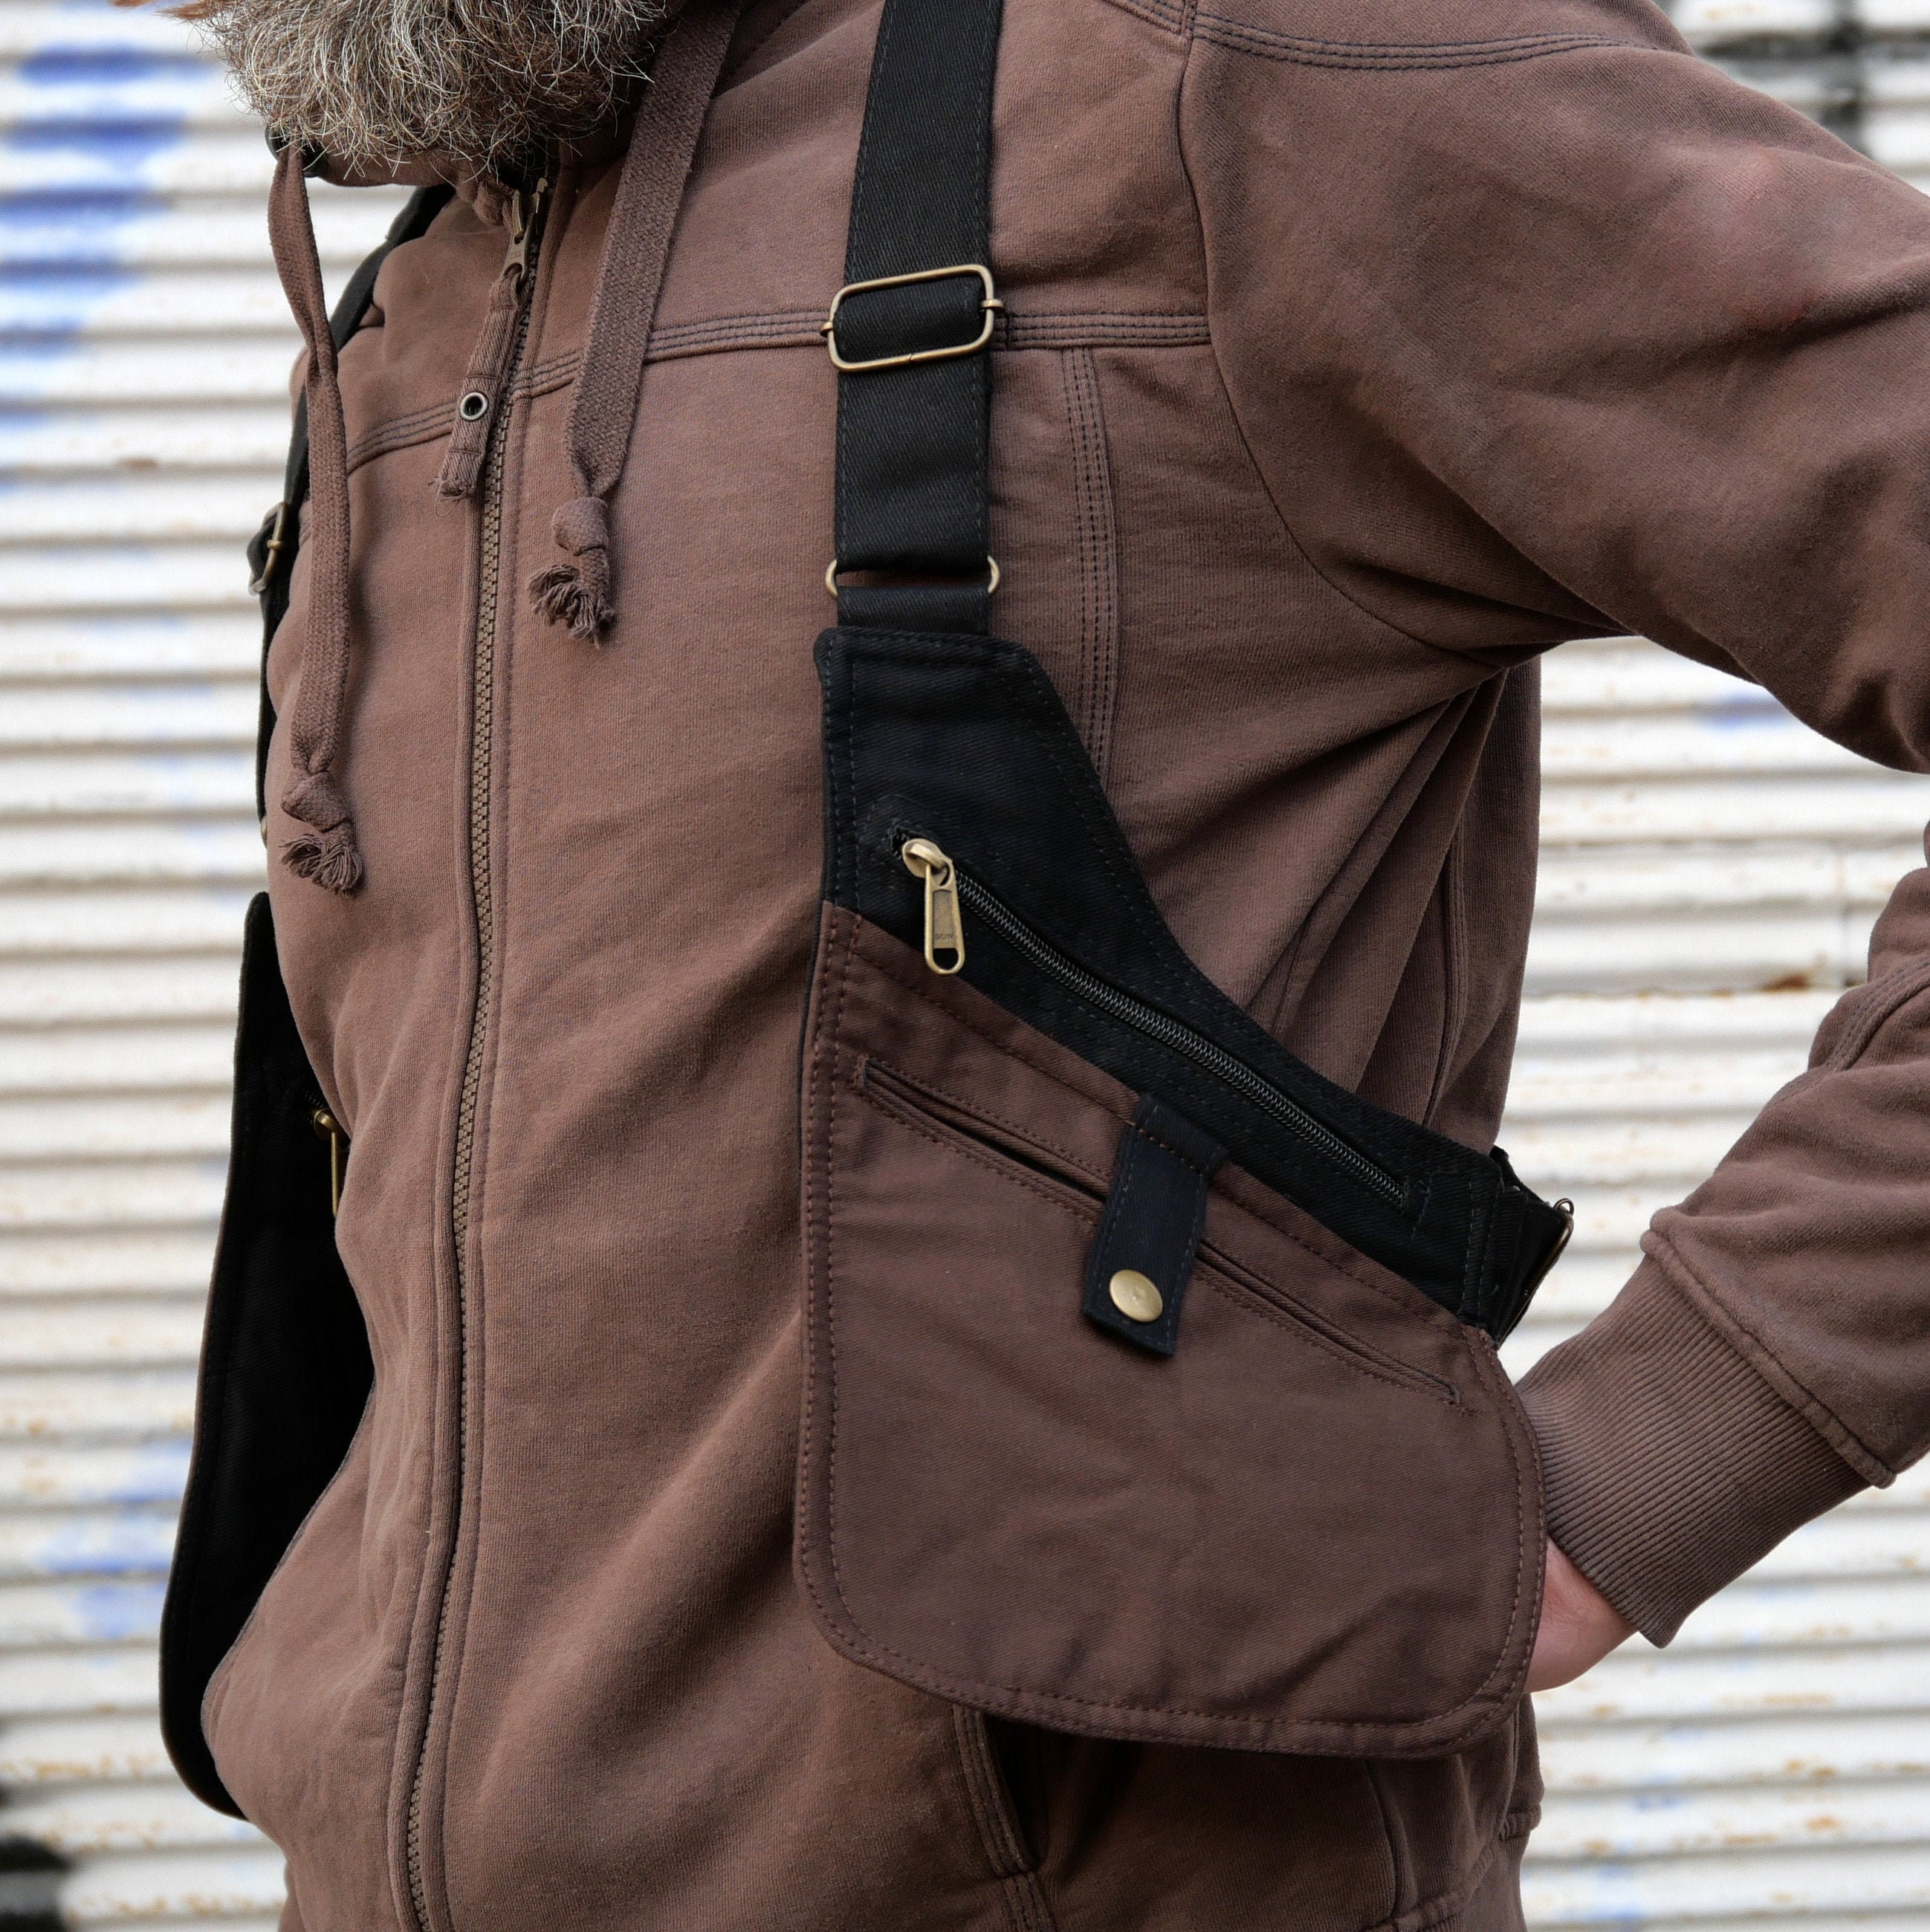 THE HOLSTER Harness Bag Utility Vest 6 Pockets Fully 